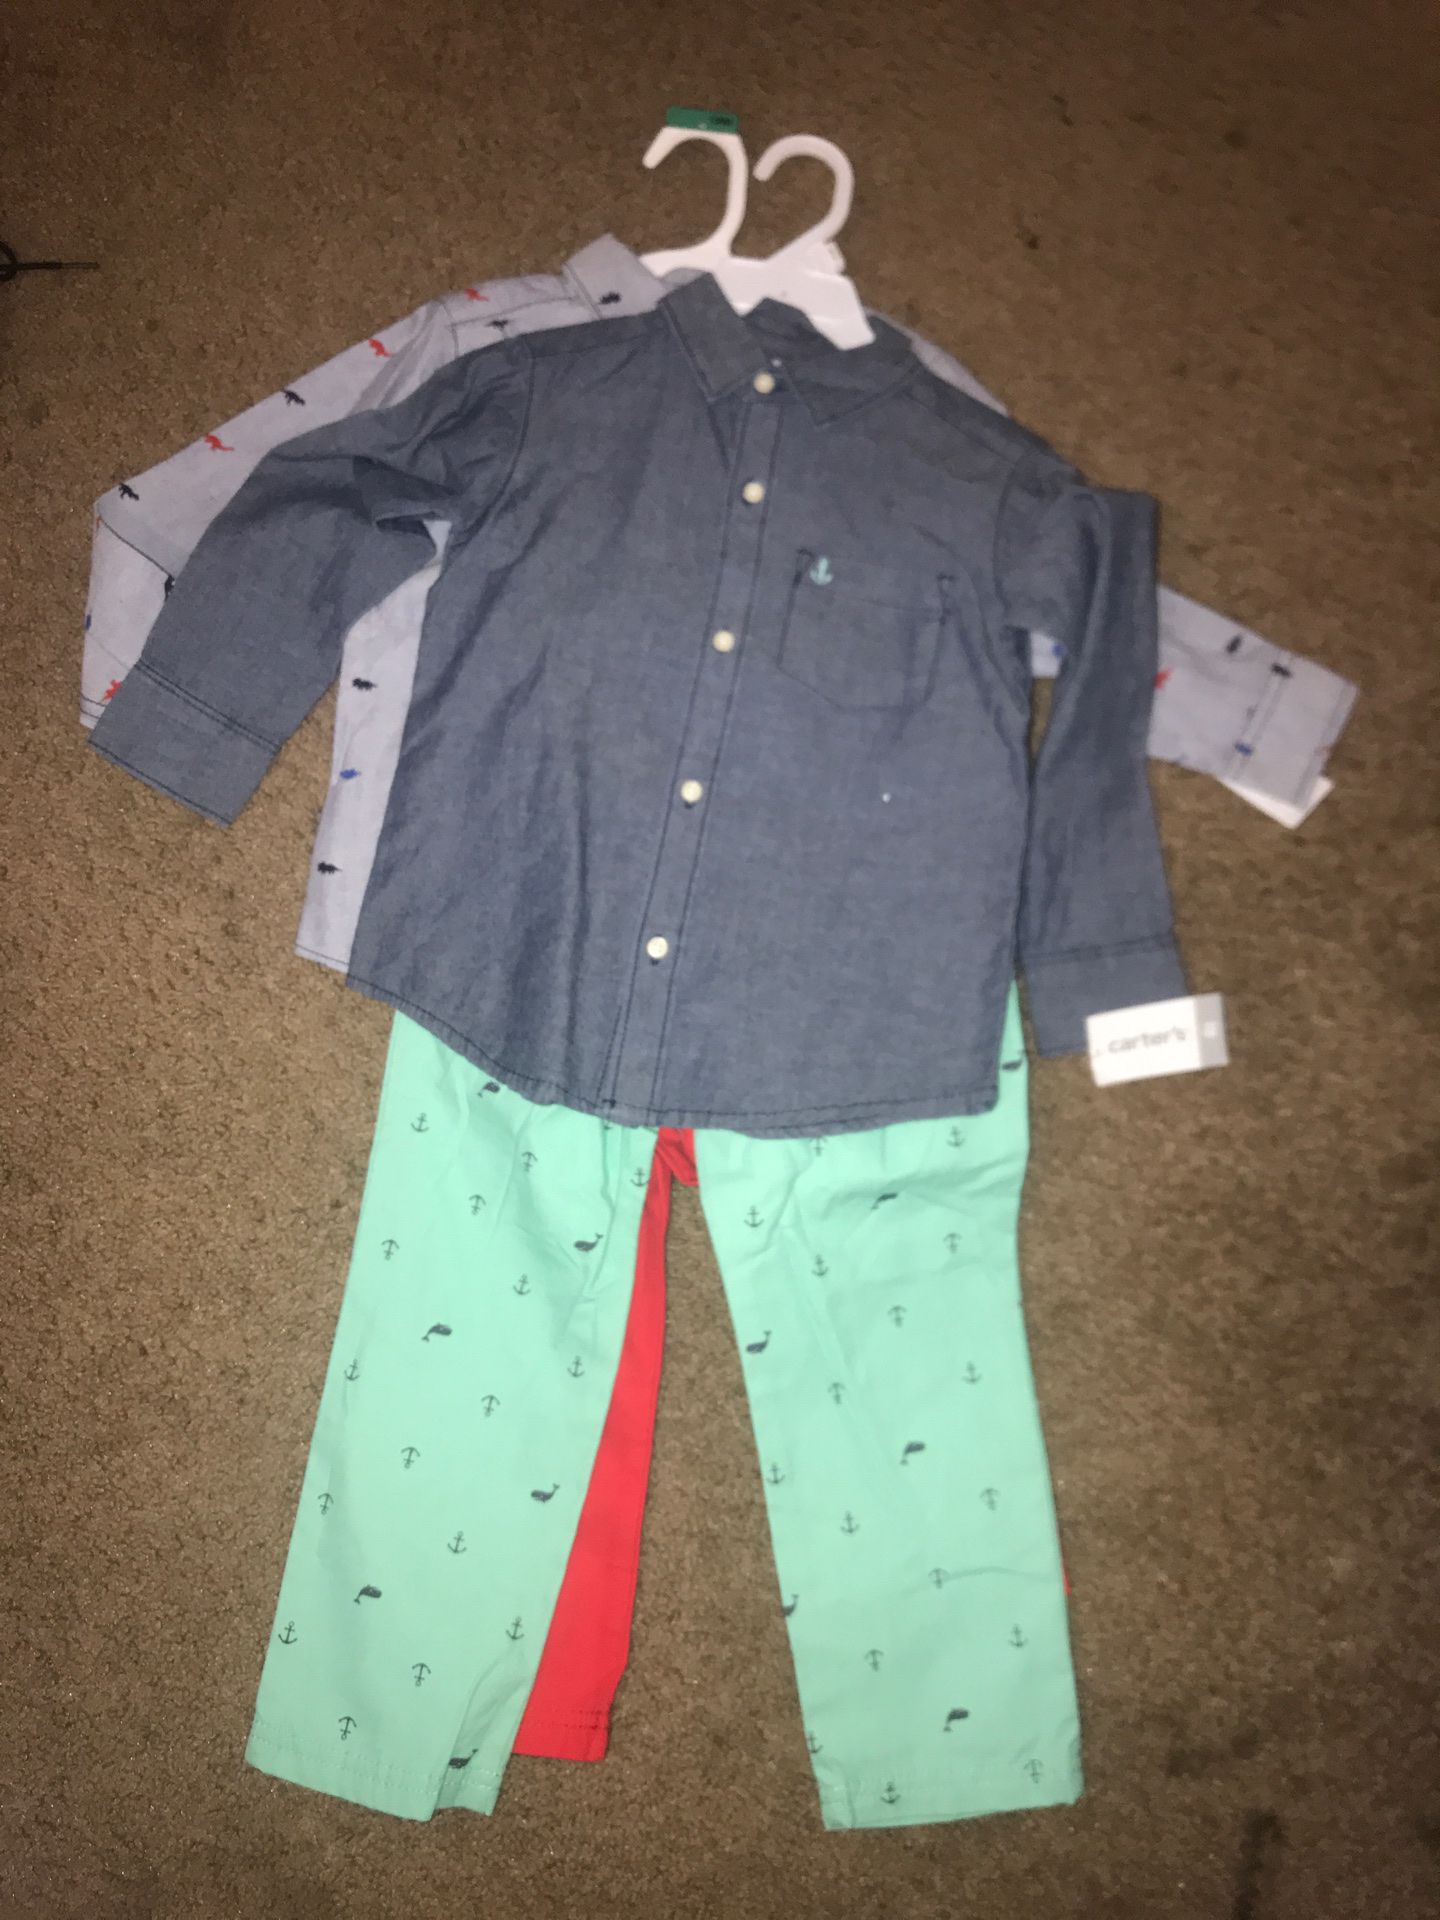 Boys clothes size 4T